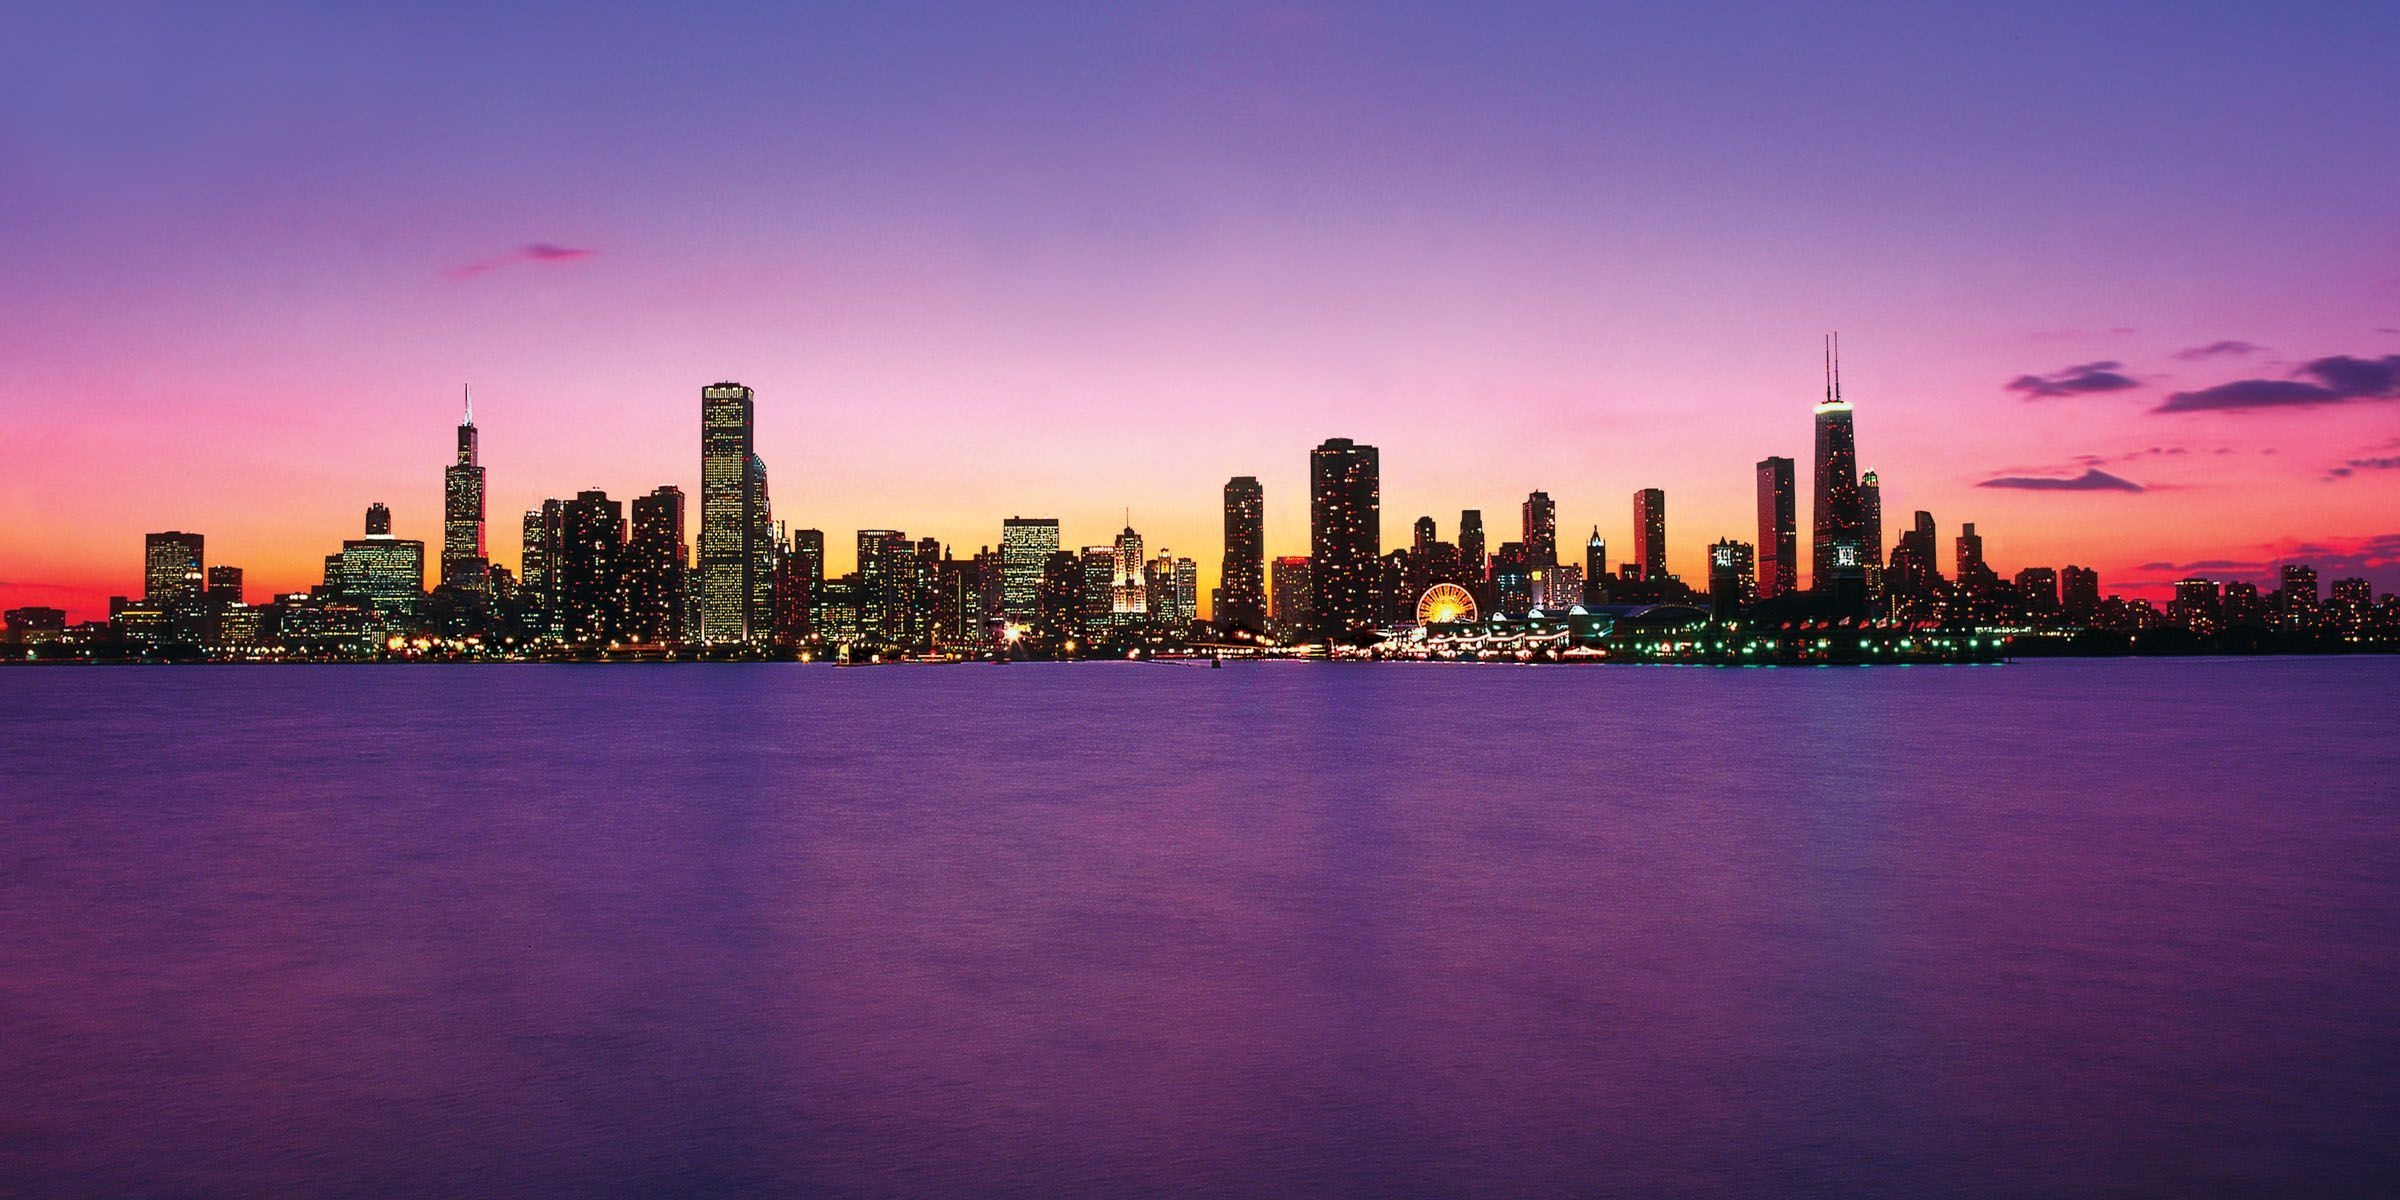 Chicago Skyline, Travels, Purple wallpapers, 2400x1200 Dual Screen Desktop